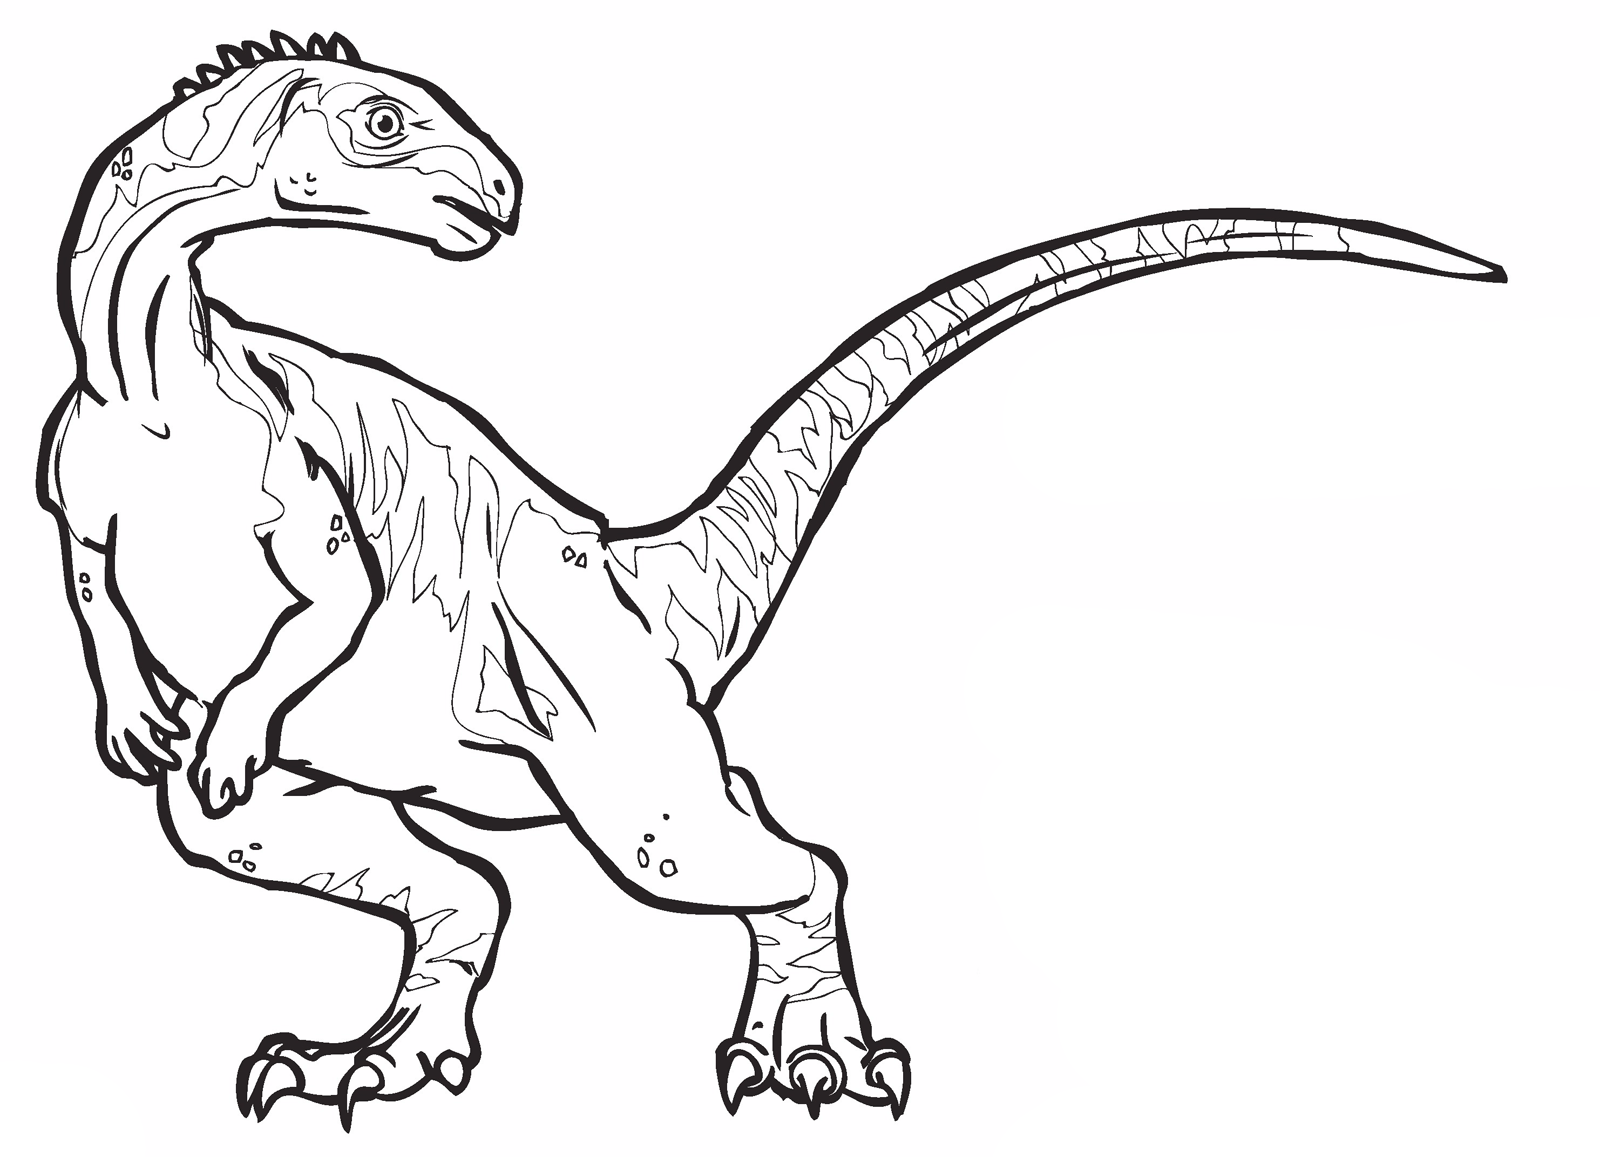 Walking with Dinosaurs - Parksosaurus is an herbivorous dinosaur